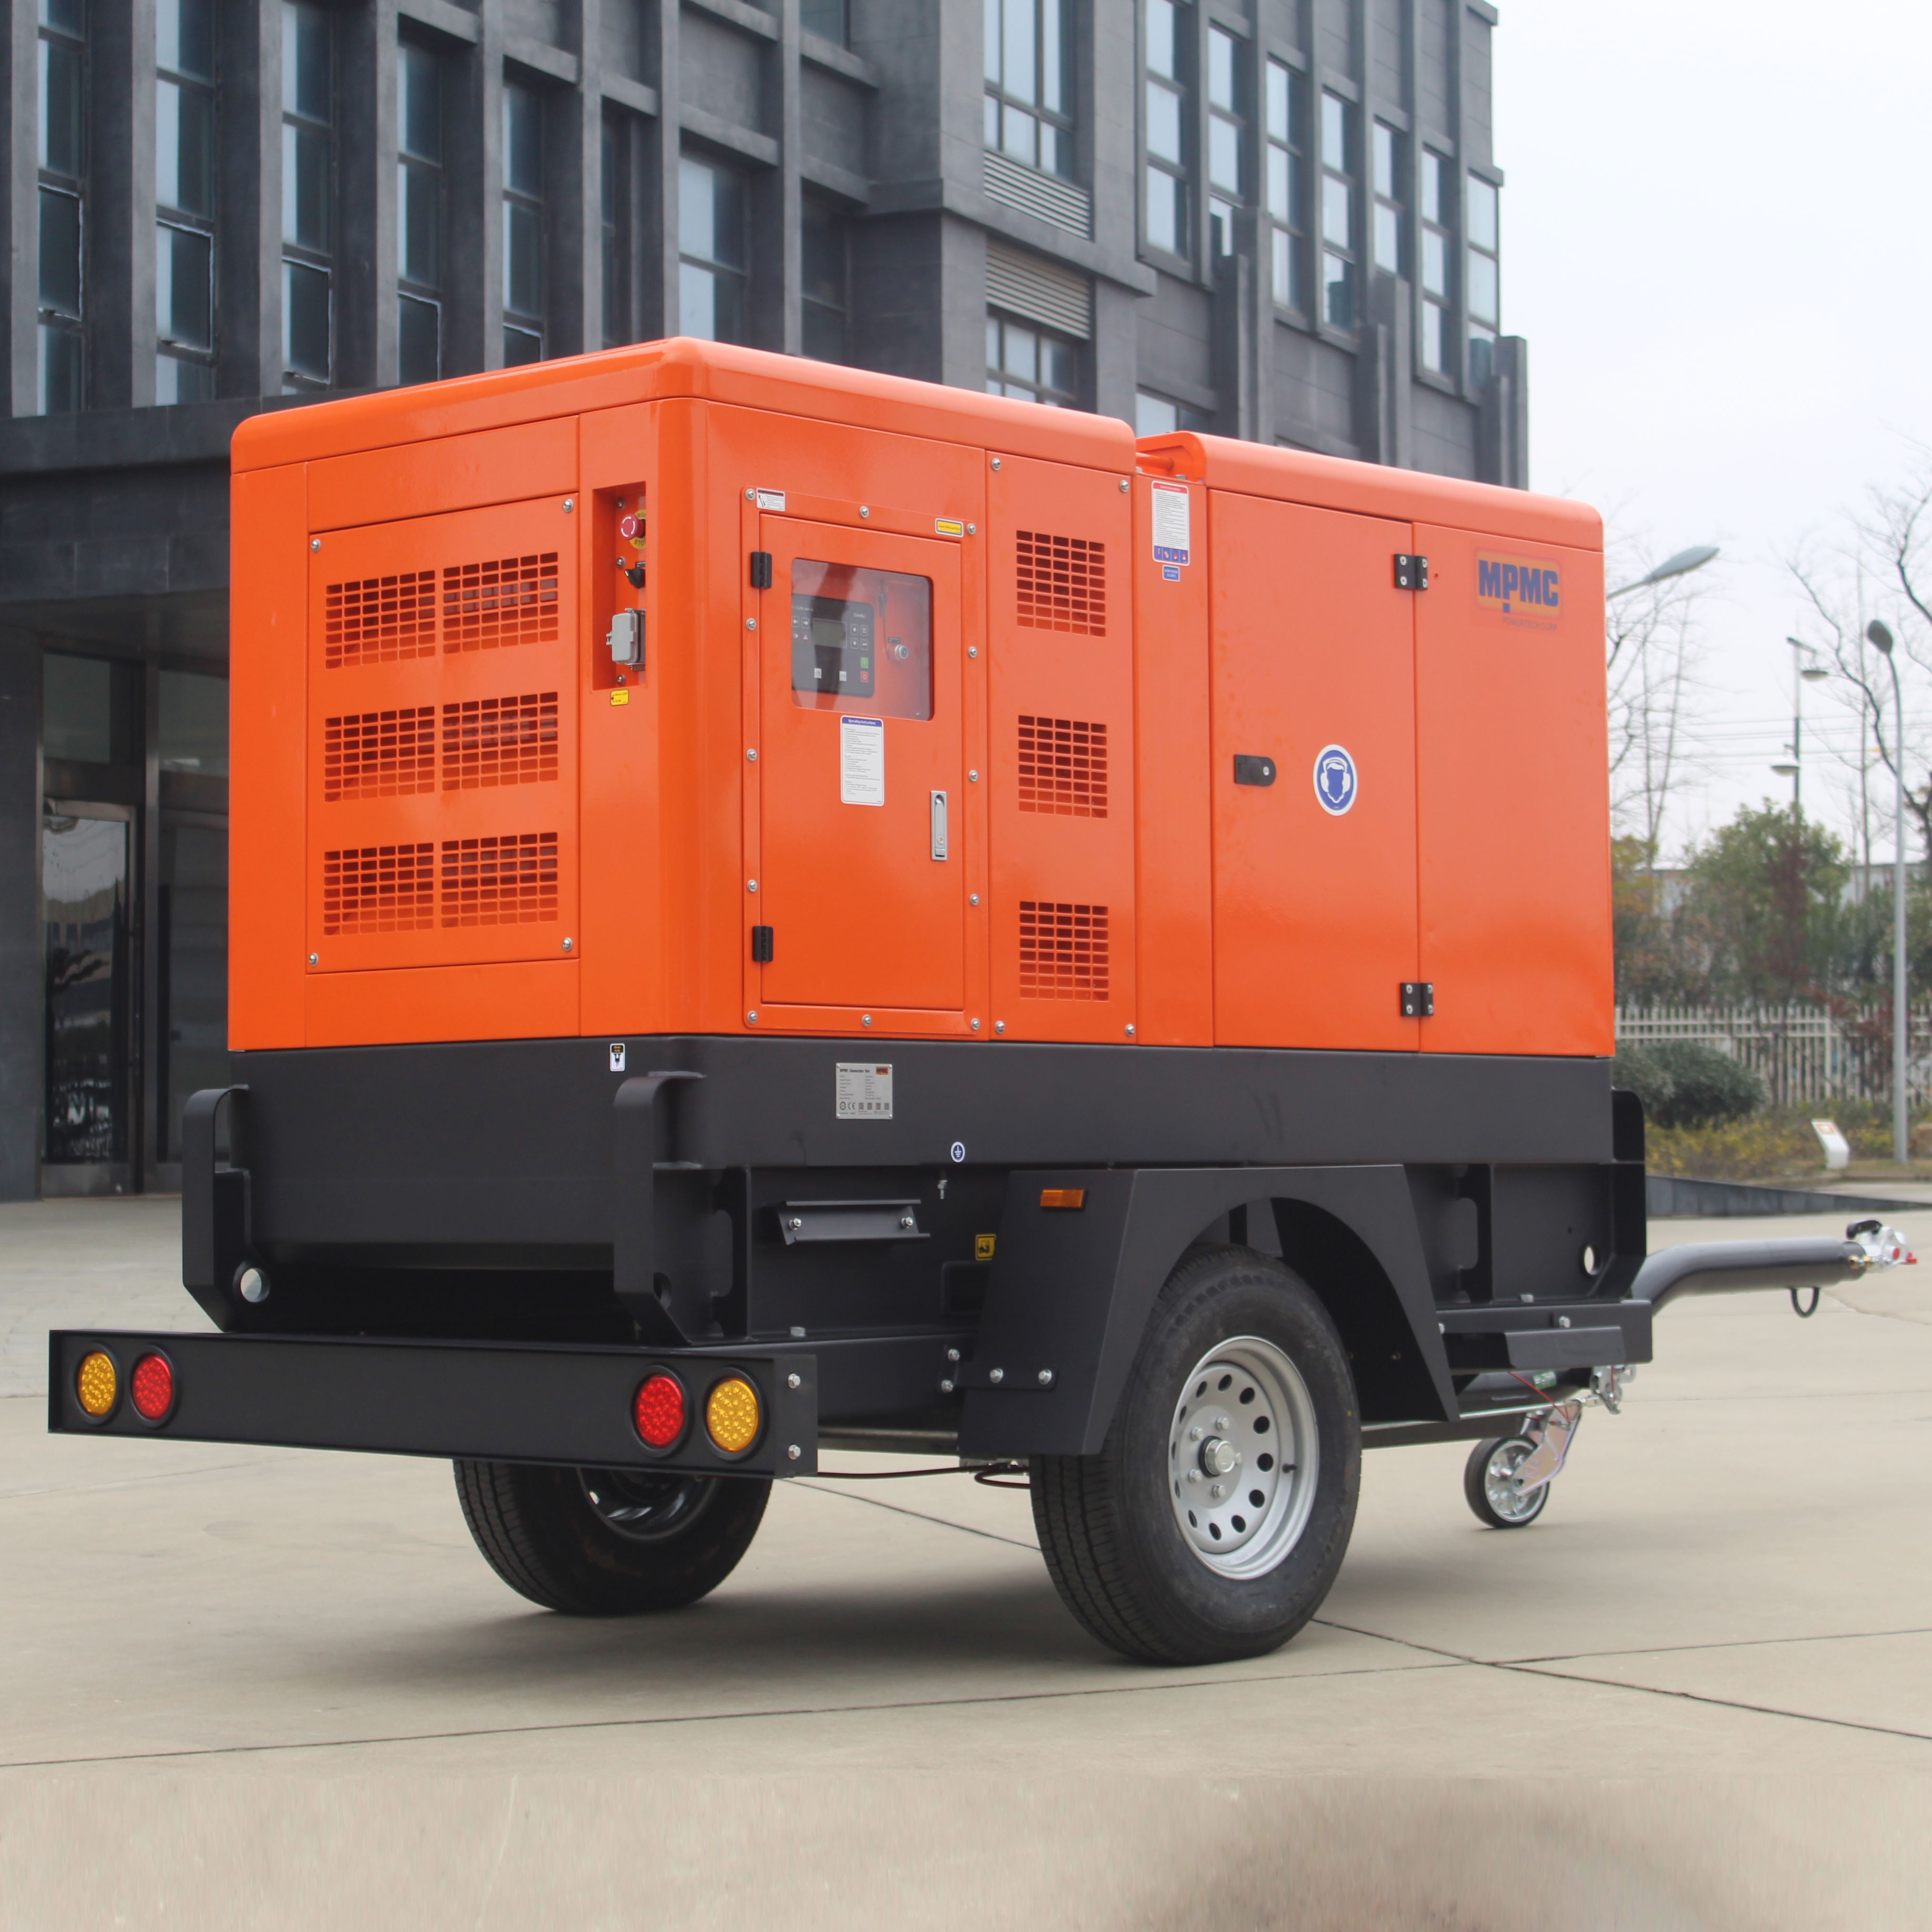 Diesel generator set(trailer type)